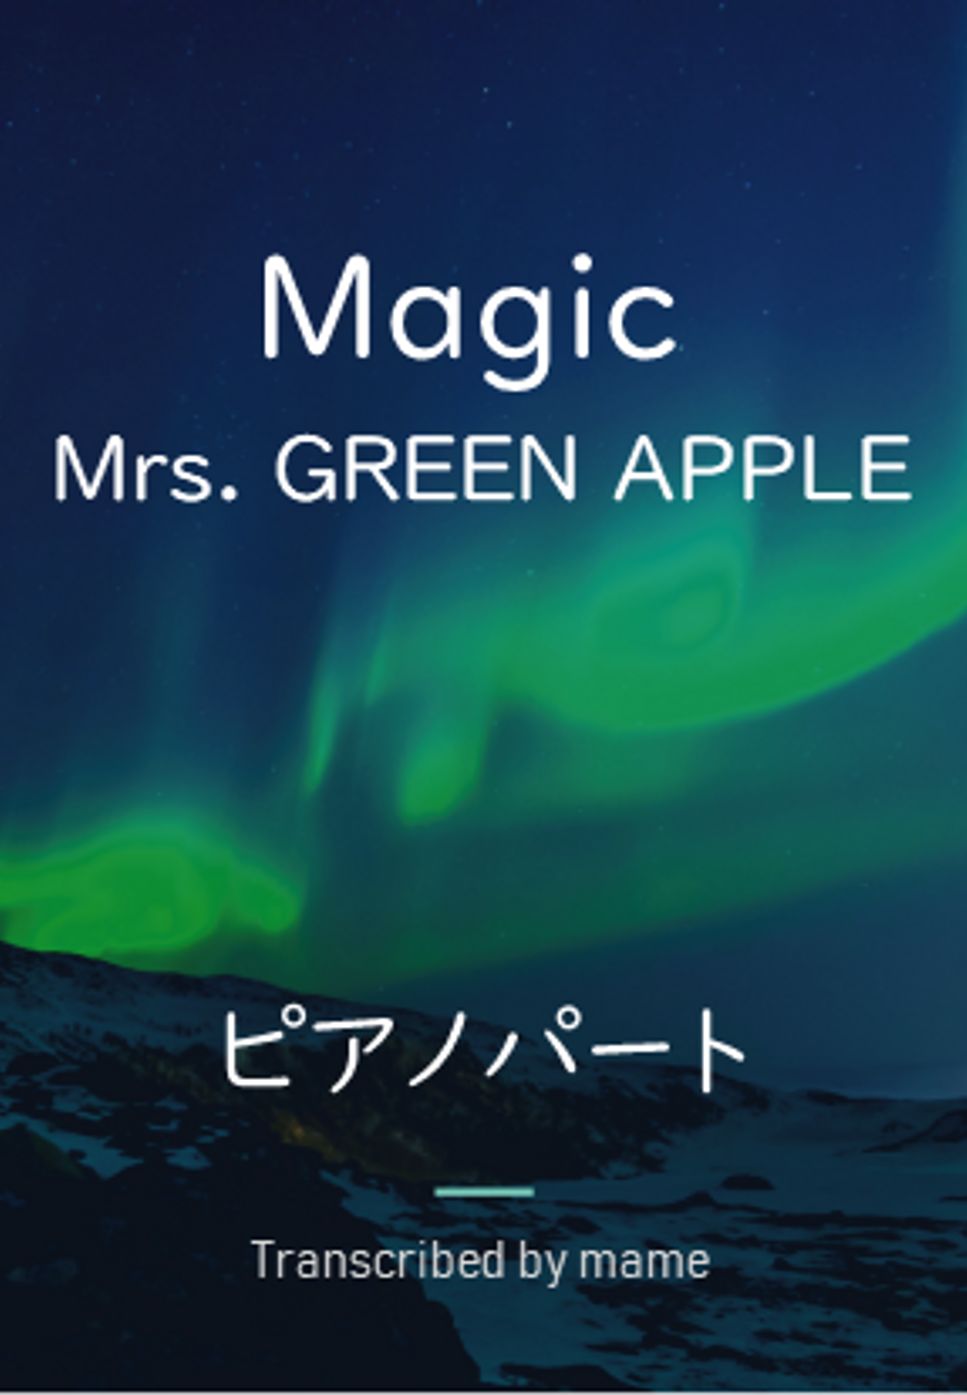 Mrs. GREEN APPLE - Magic (キーボードパート) by mame